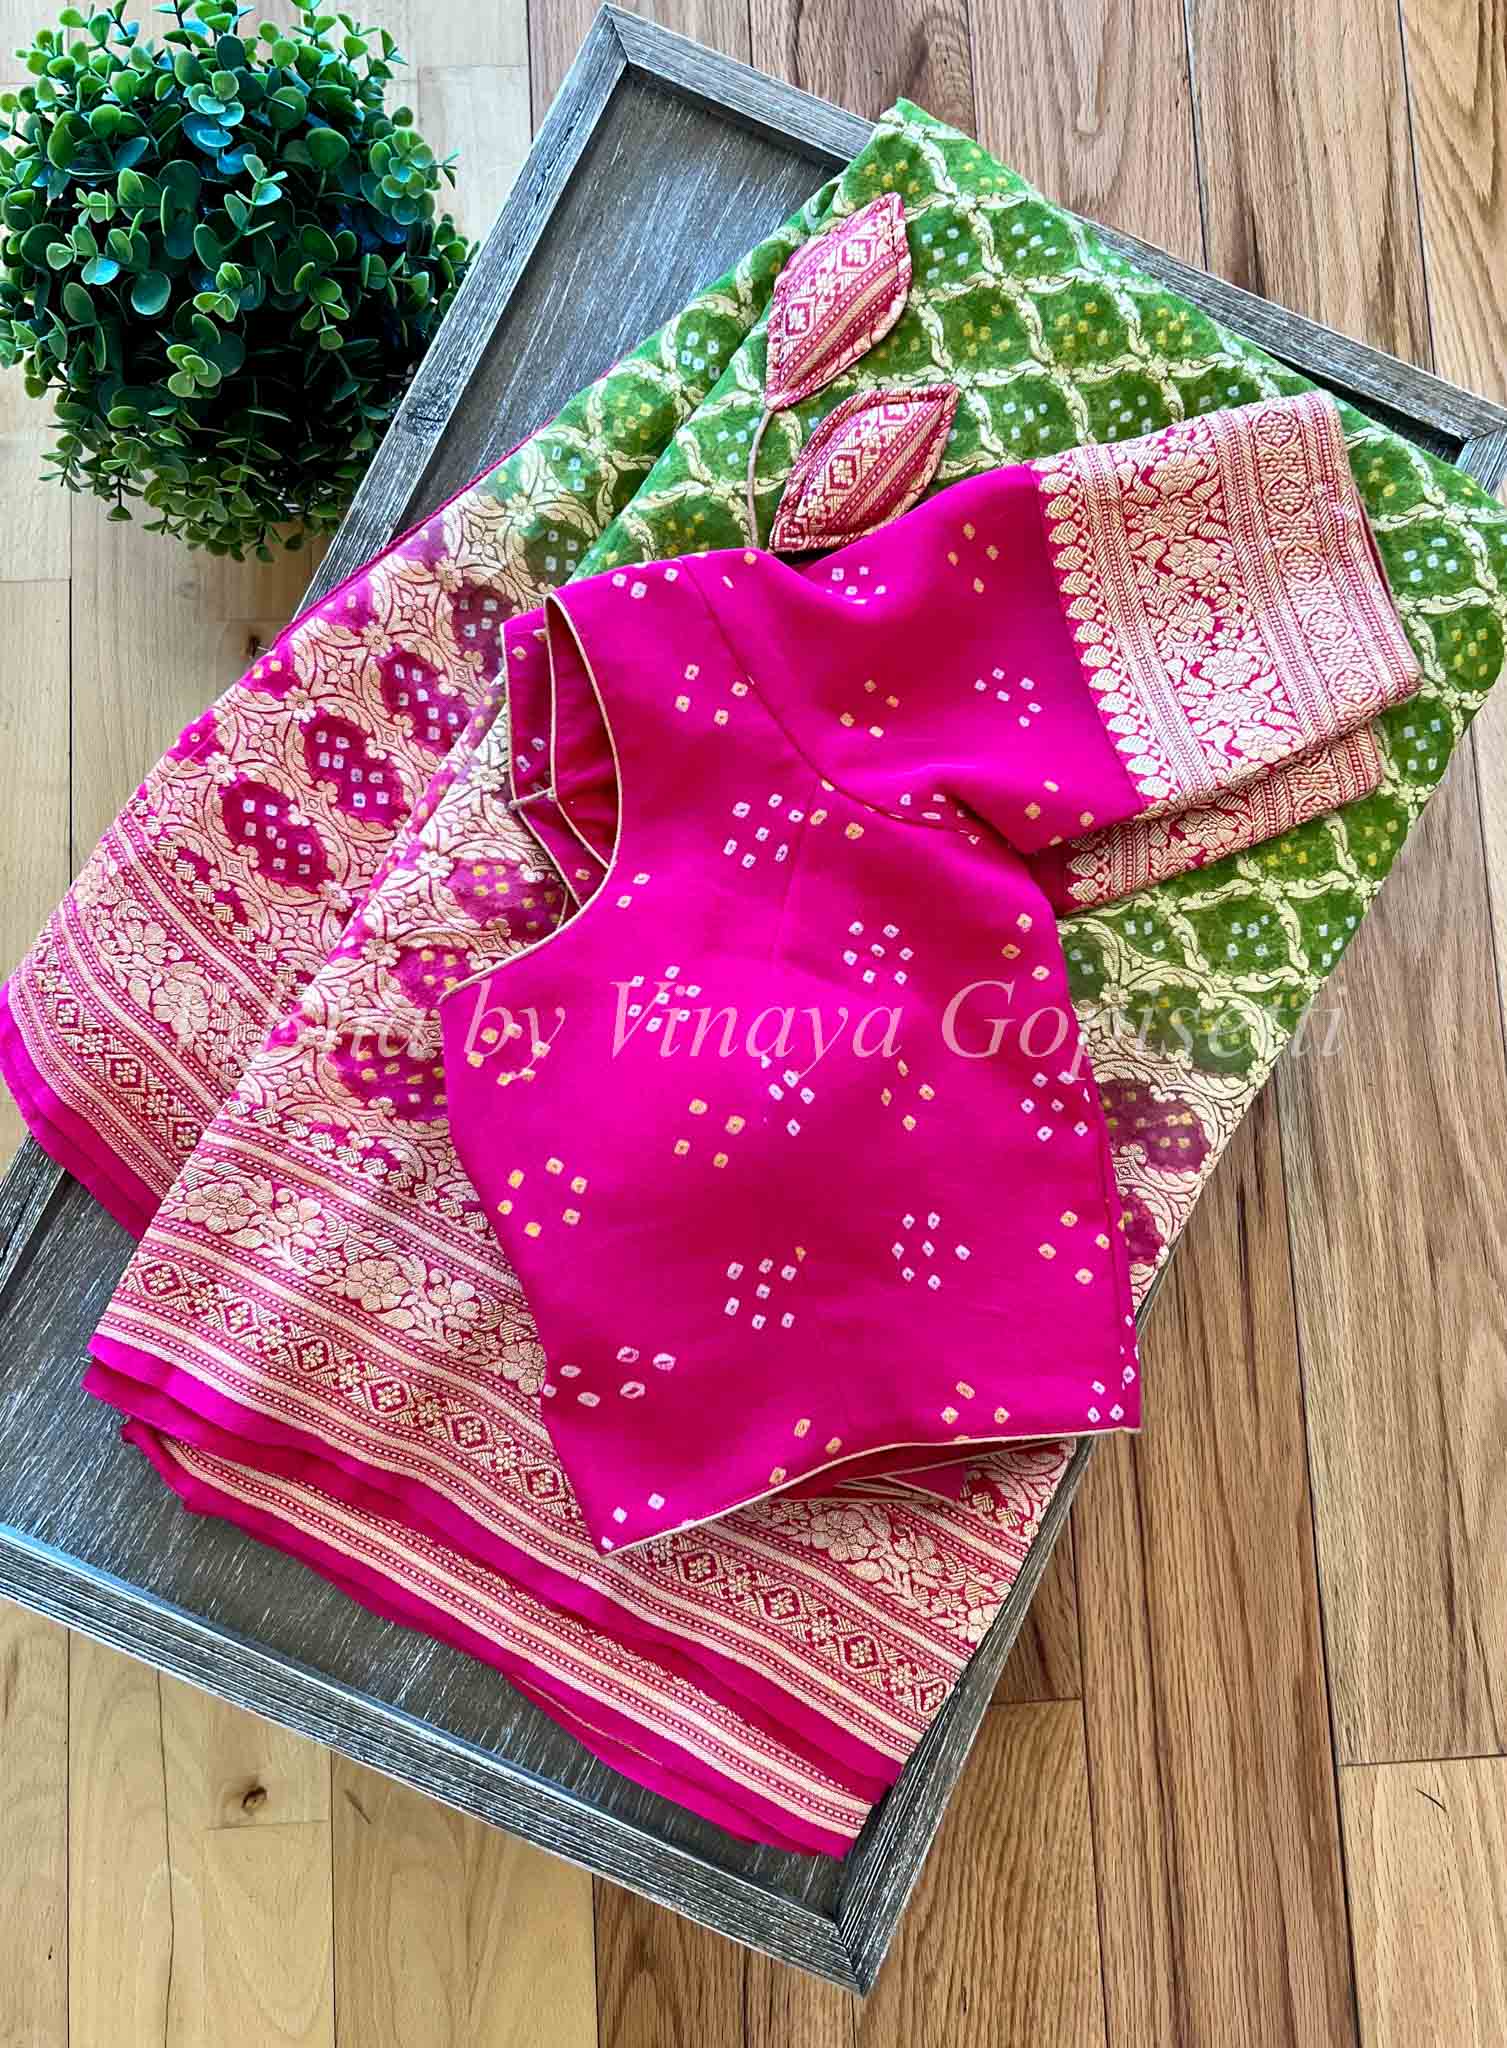 Ahaana - Green Soft Silk Saree With Pink Blouse, सॉफ्ट सिल्क साड़ी - S  Pharmacy, Koothanallur | ID: 2849740077573